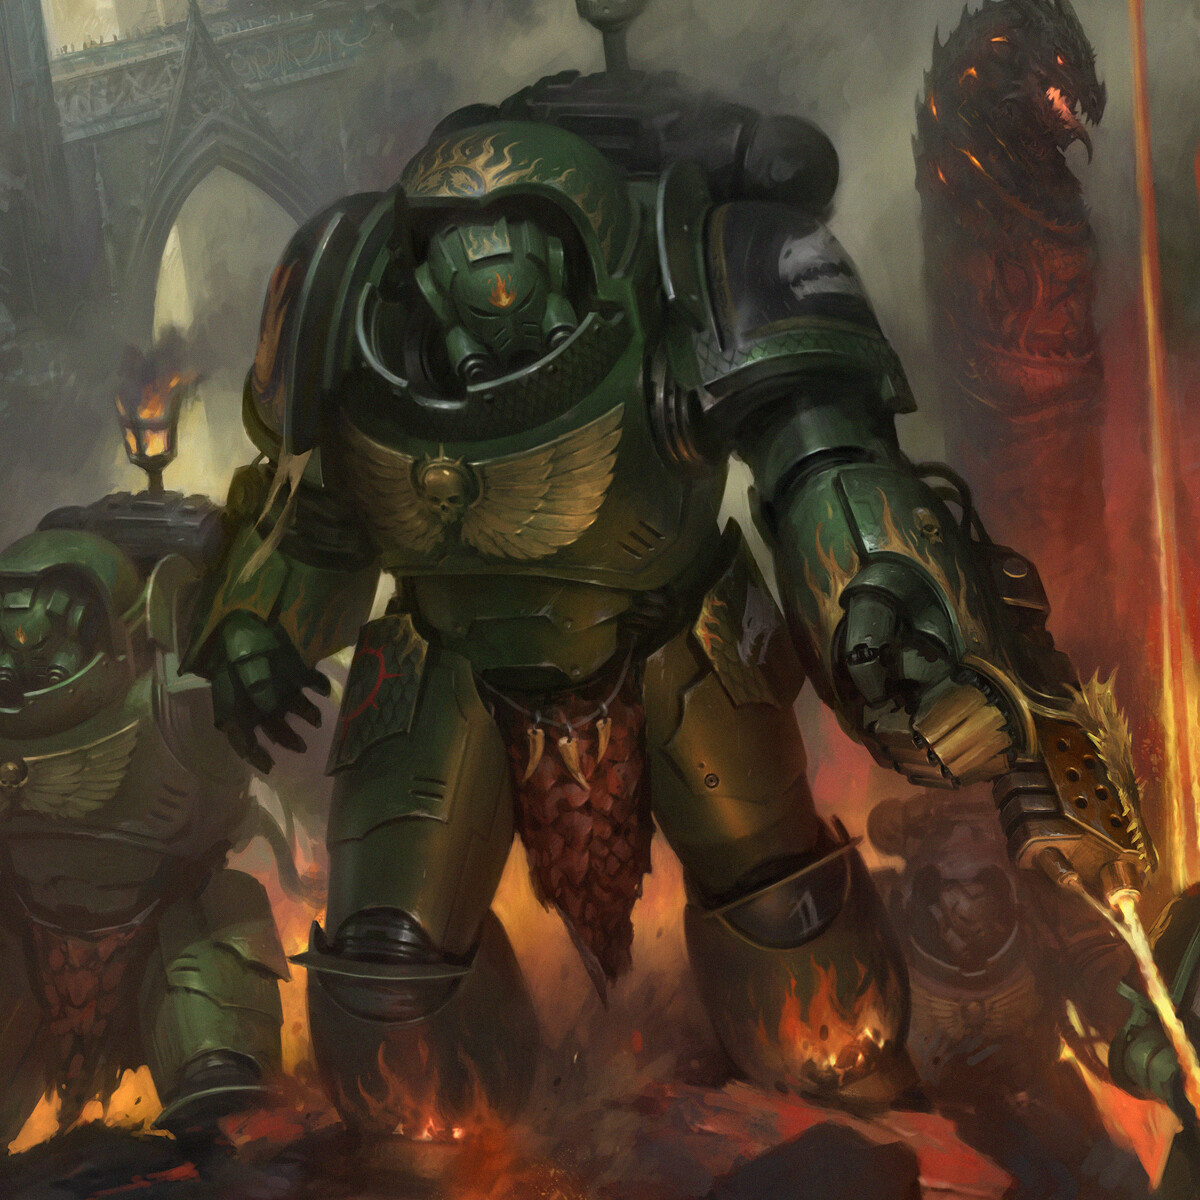 ArtStation - Warhammer 40k - Salamanders: Warforged Strike Force - Cover